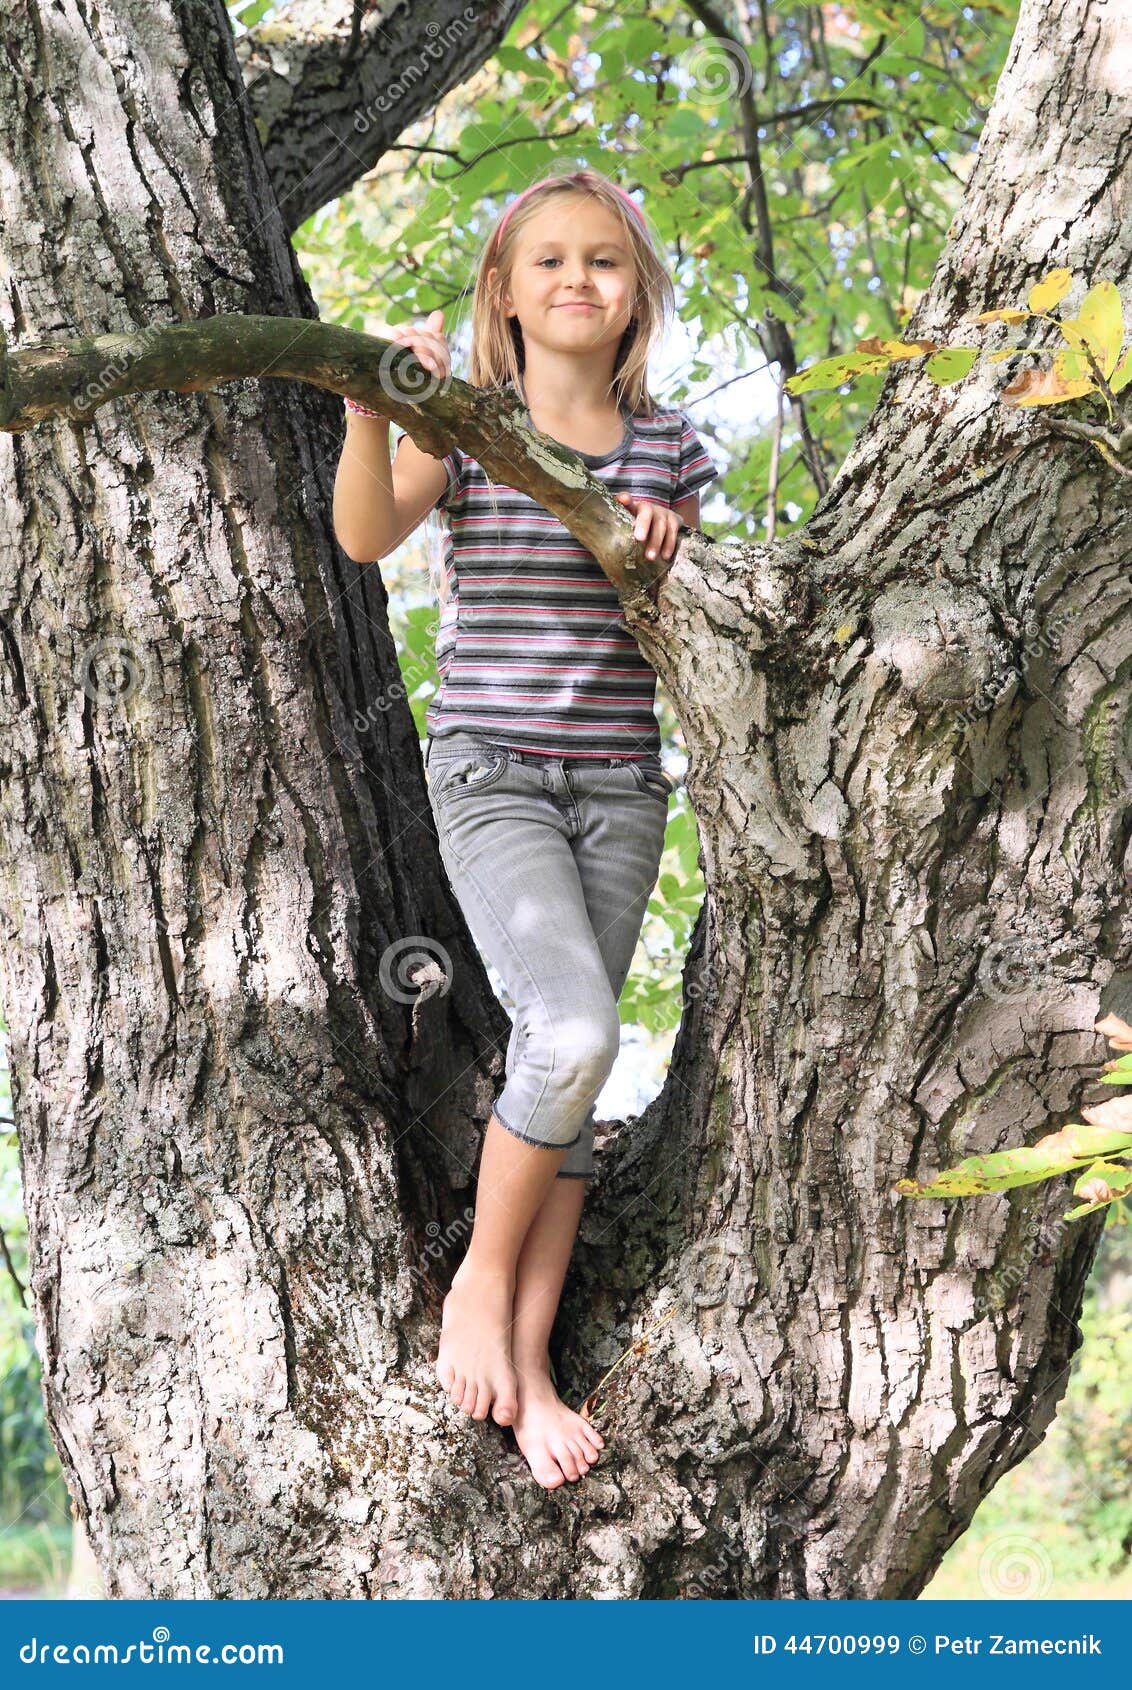 https://thumbs.dreamstime.com/z/little-kid-girl-standing-tree-smiling-barefoot-big-nut-44700999.jpg